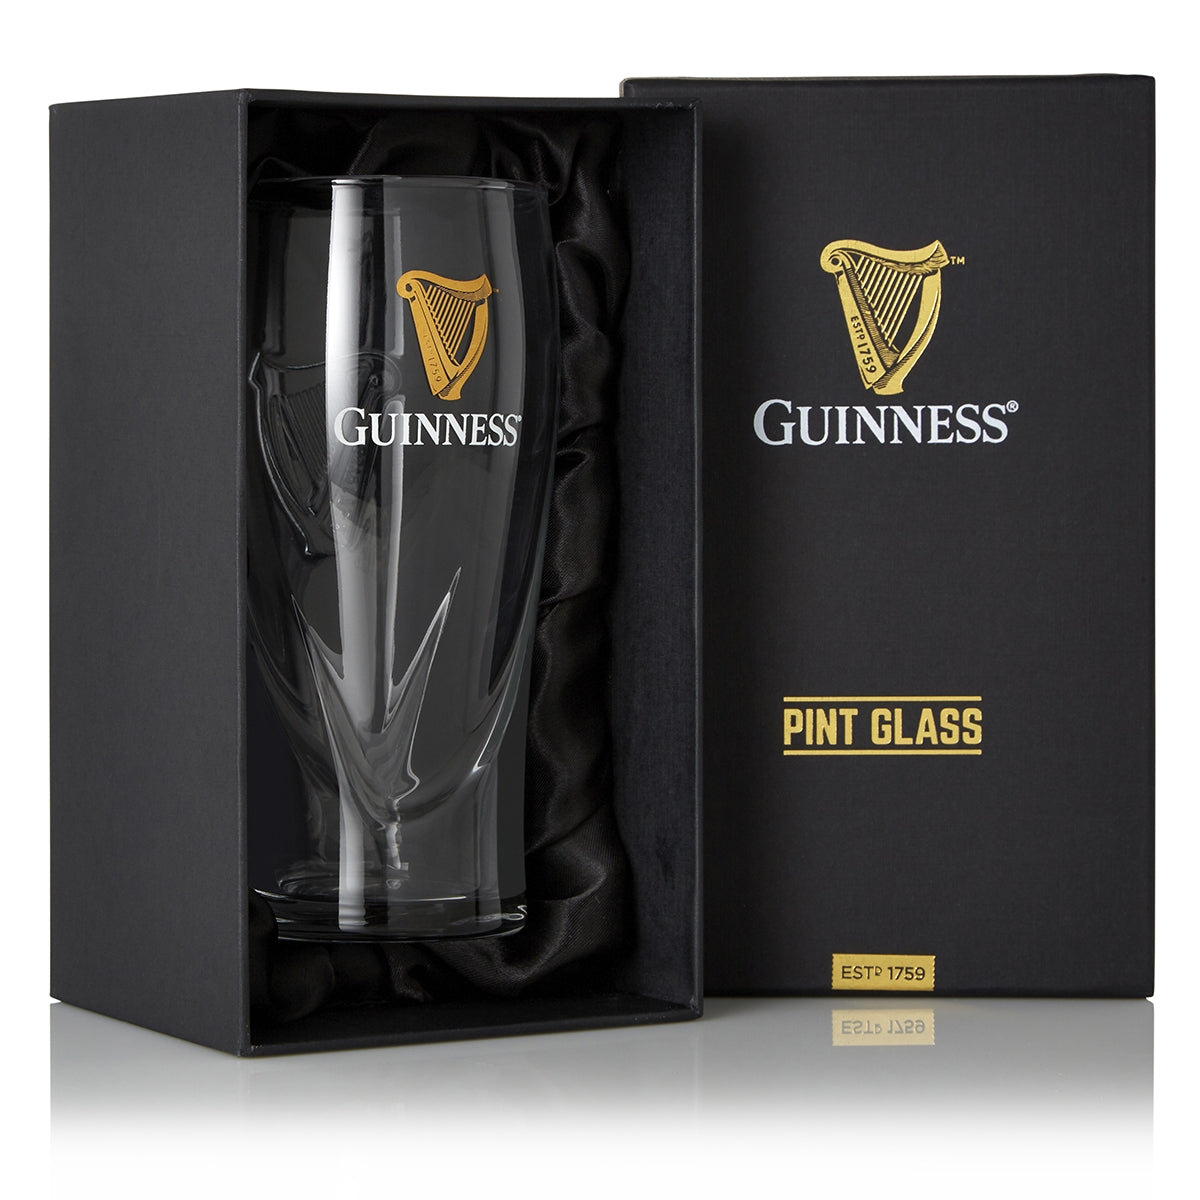 Guinness Pint Glass